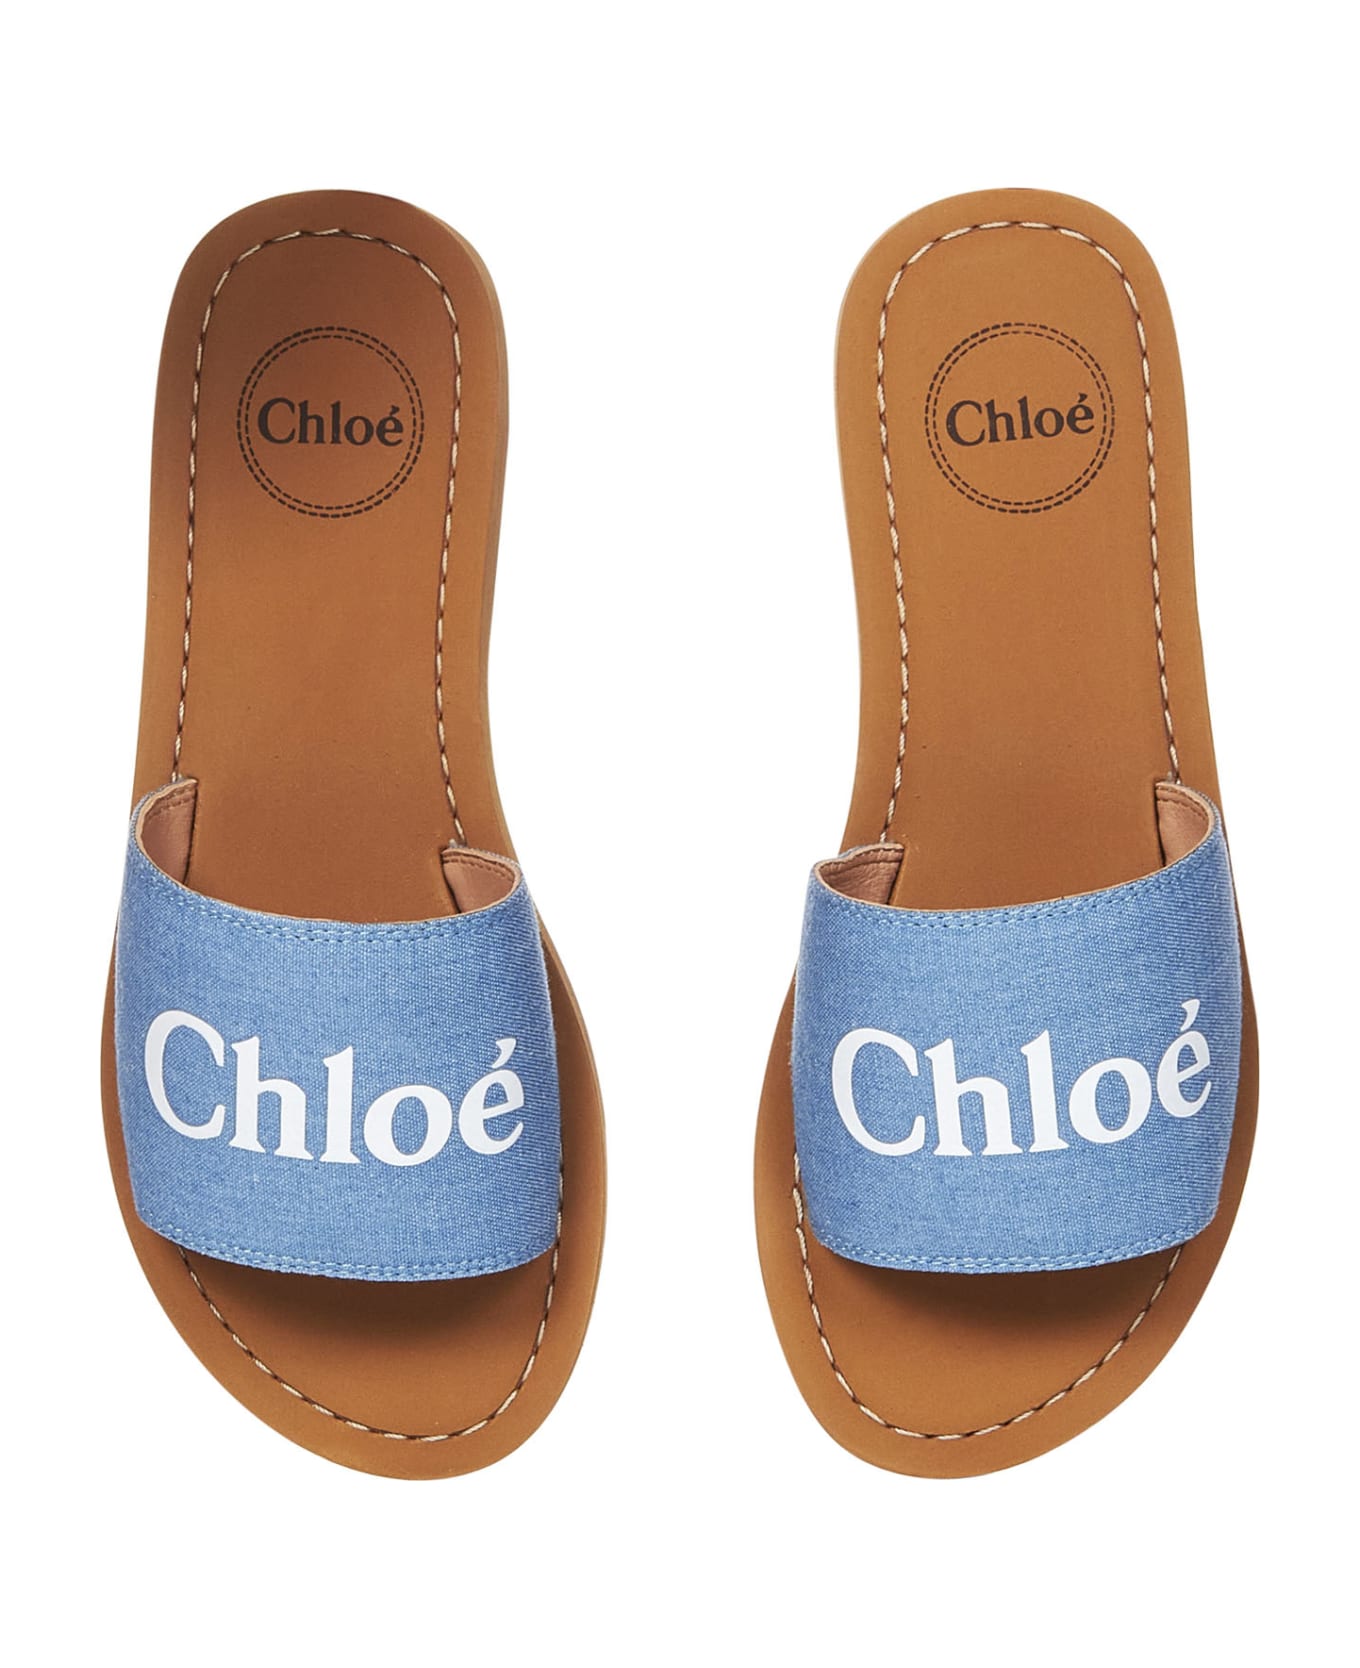 Chloé Kids Sandals - Brown